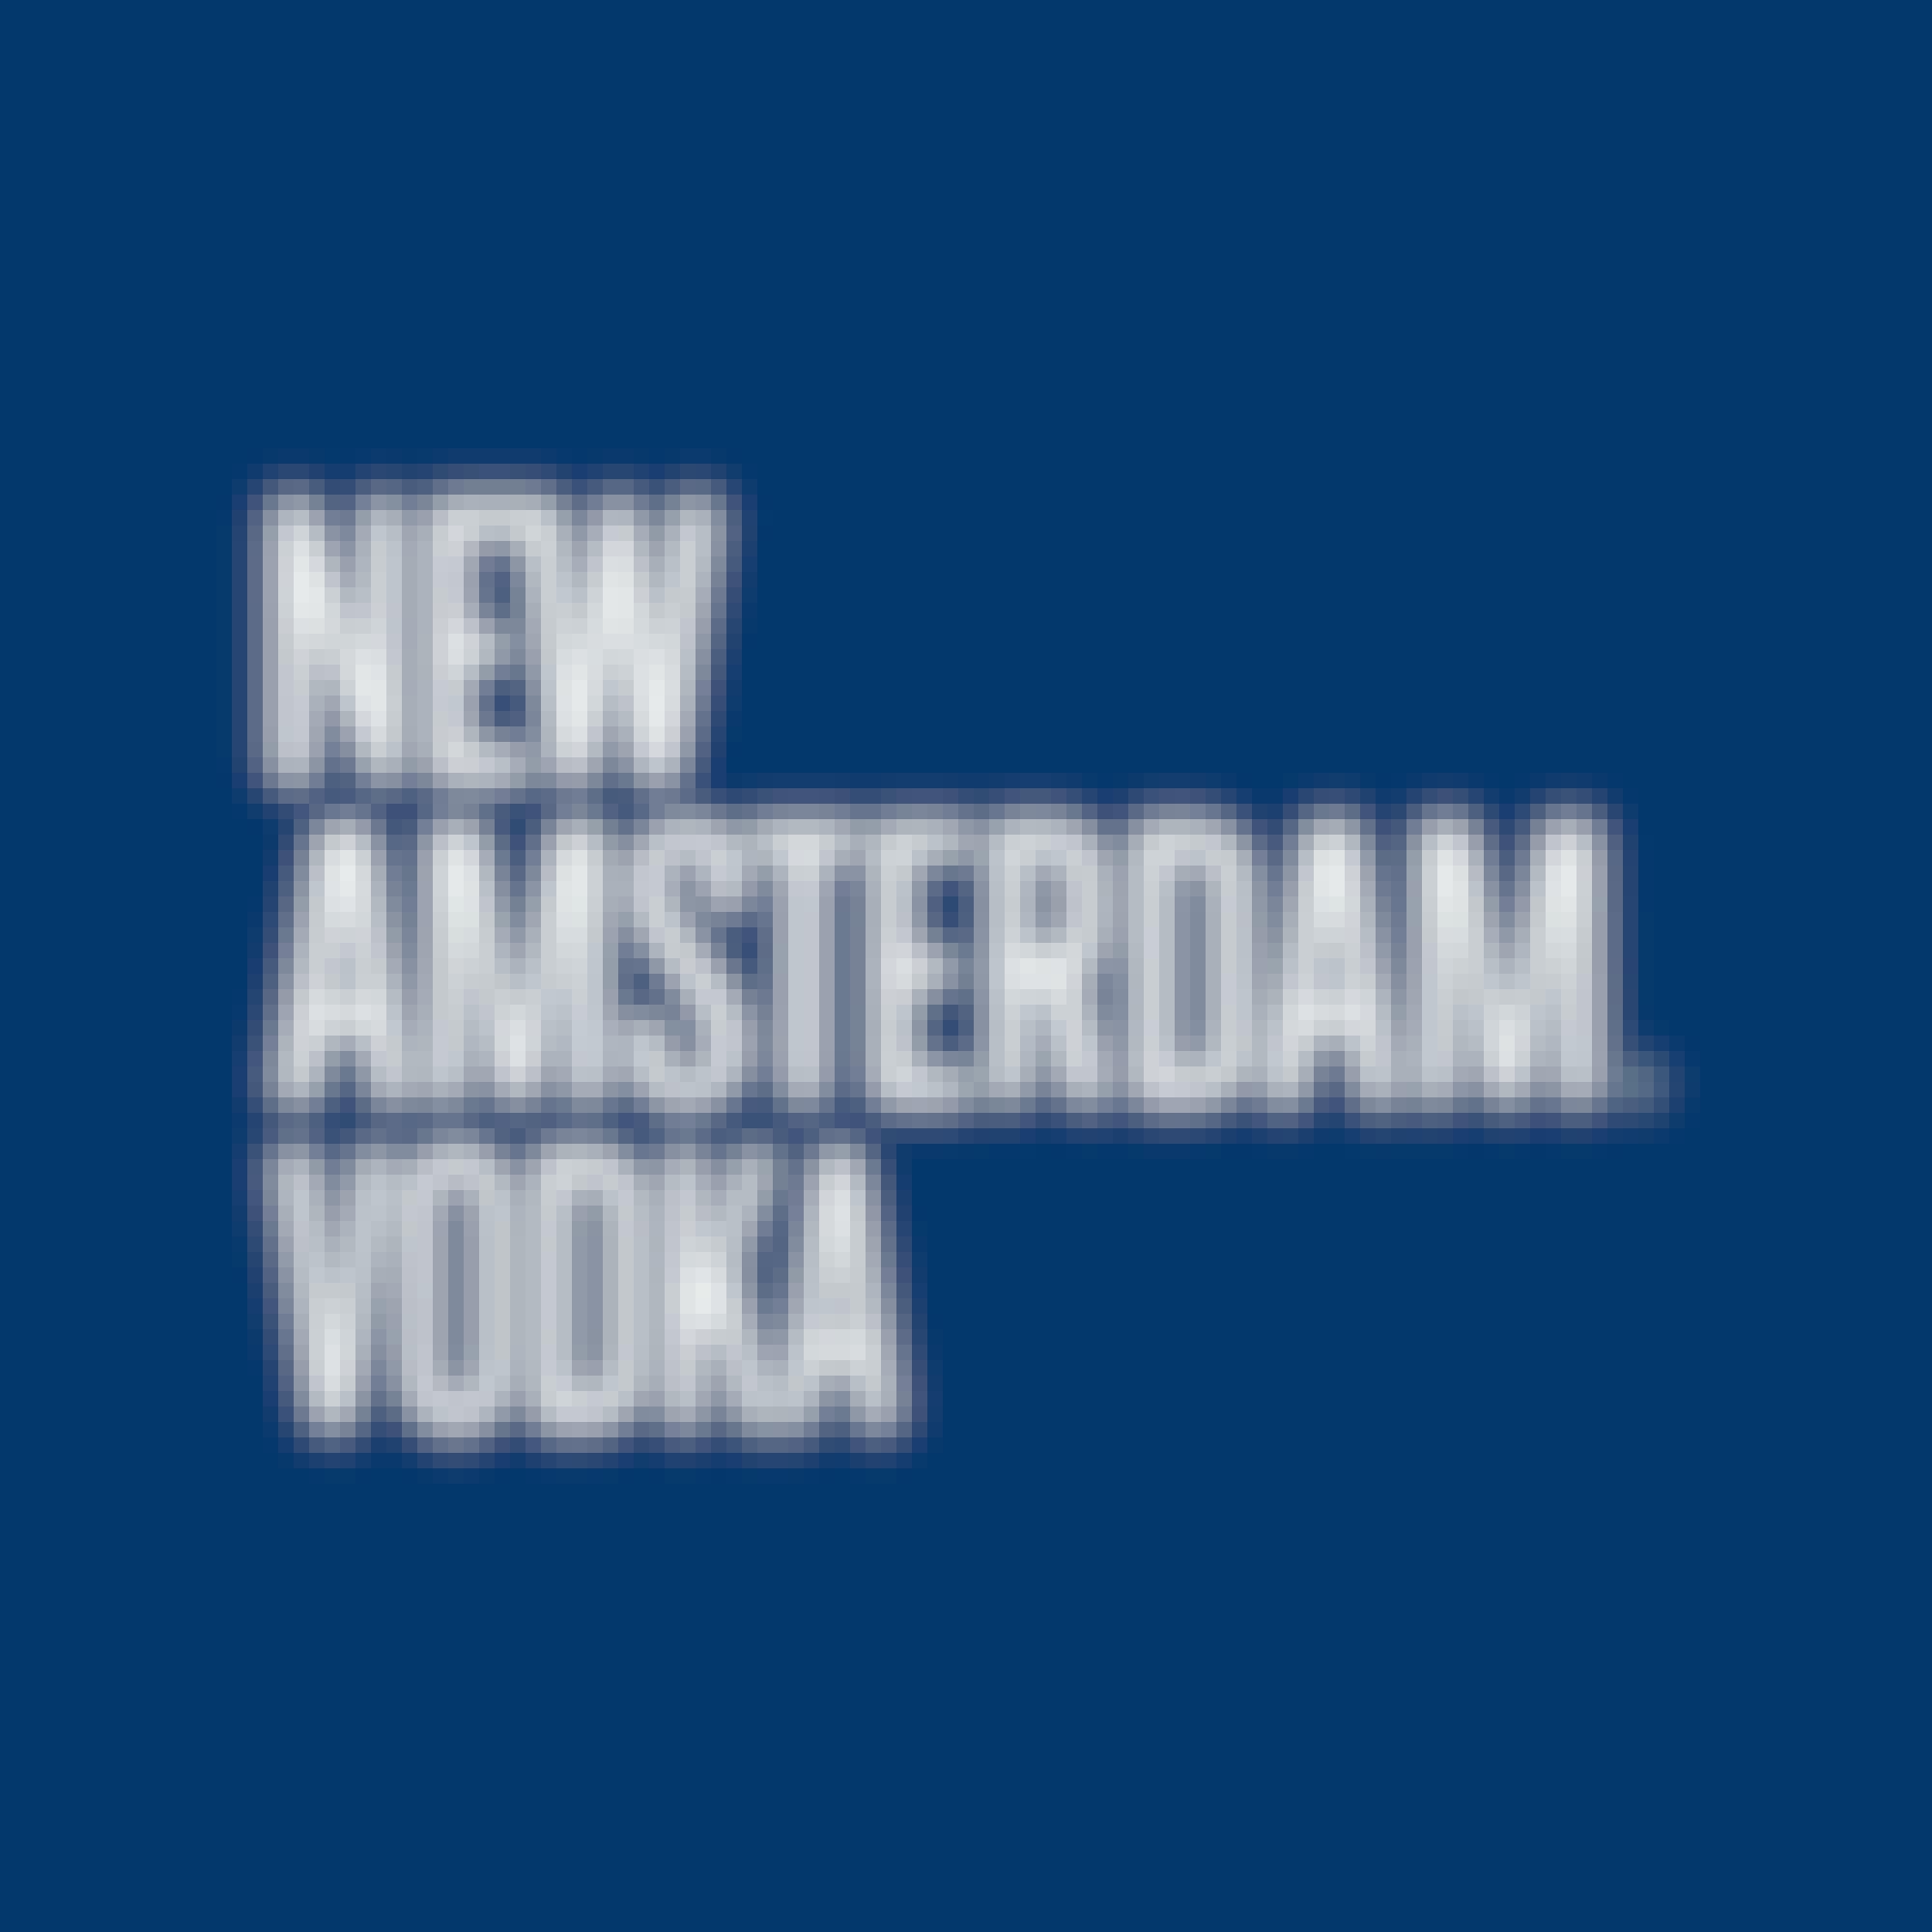 New Amsterdam Watermelon Vodka 750ml